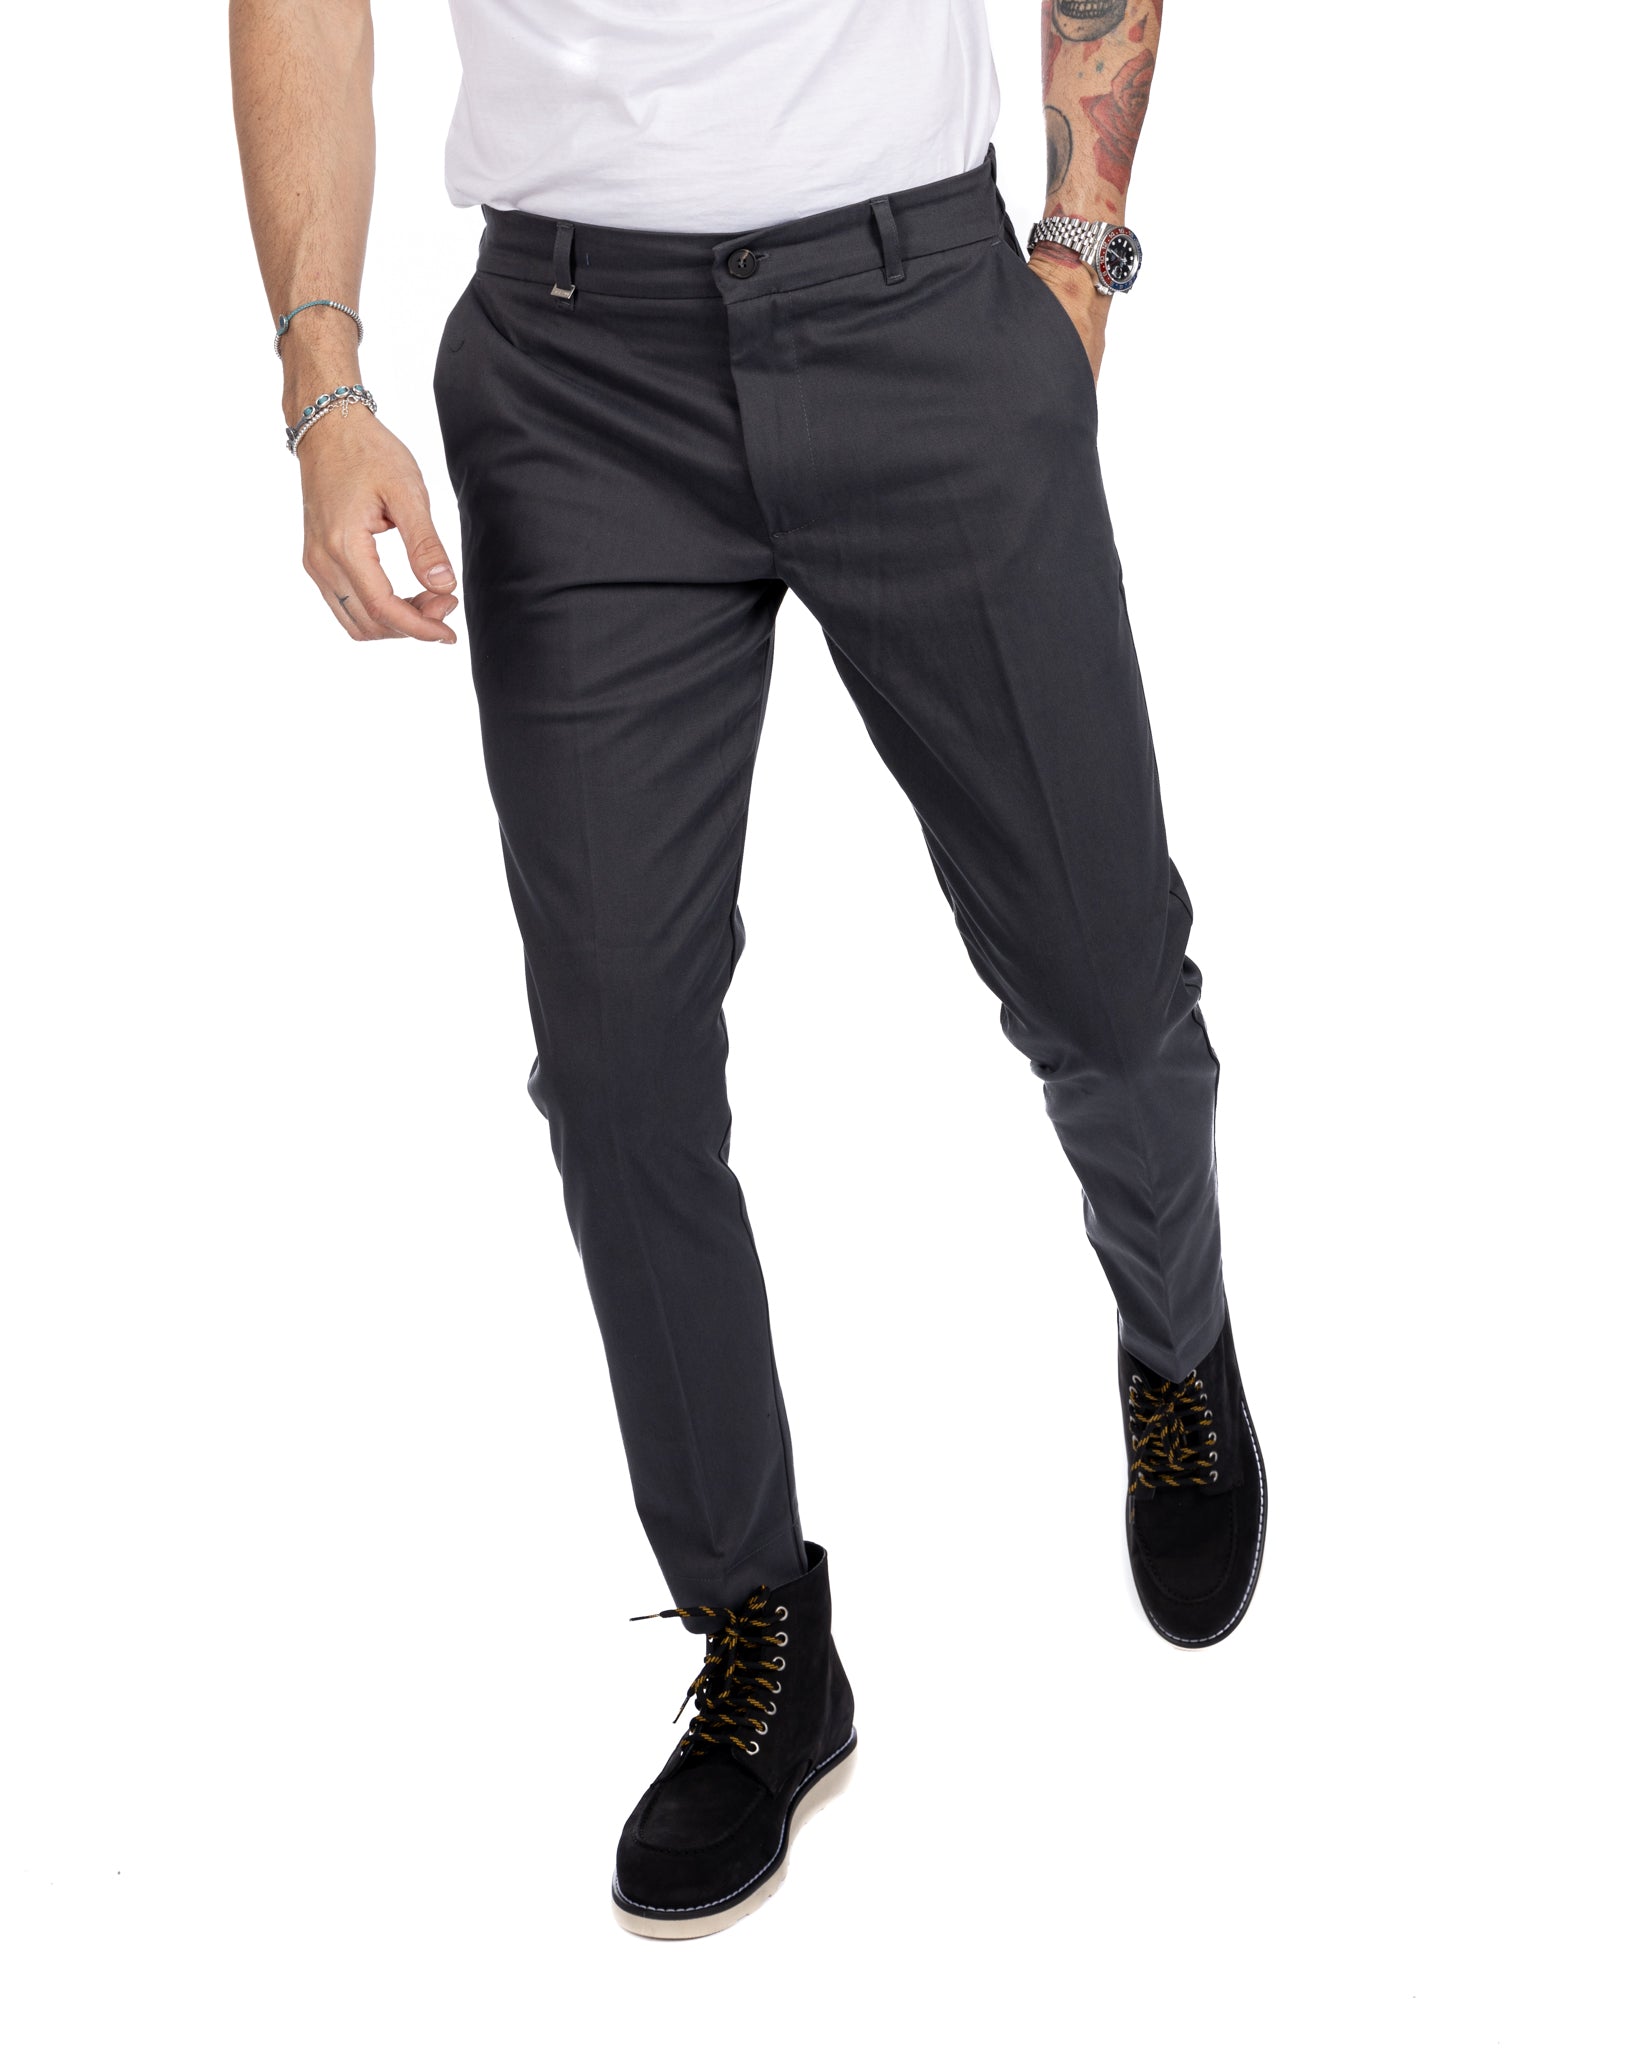 Elder - gray cotton capri trousers